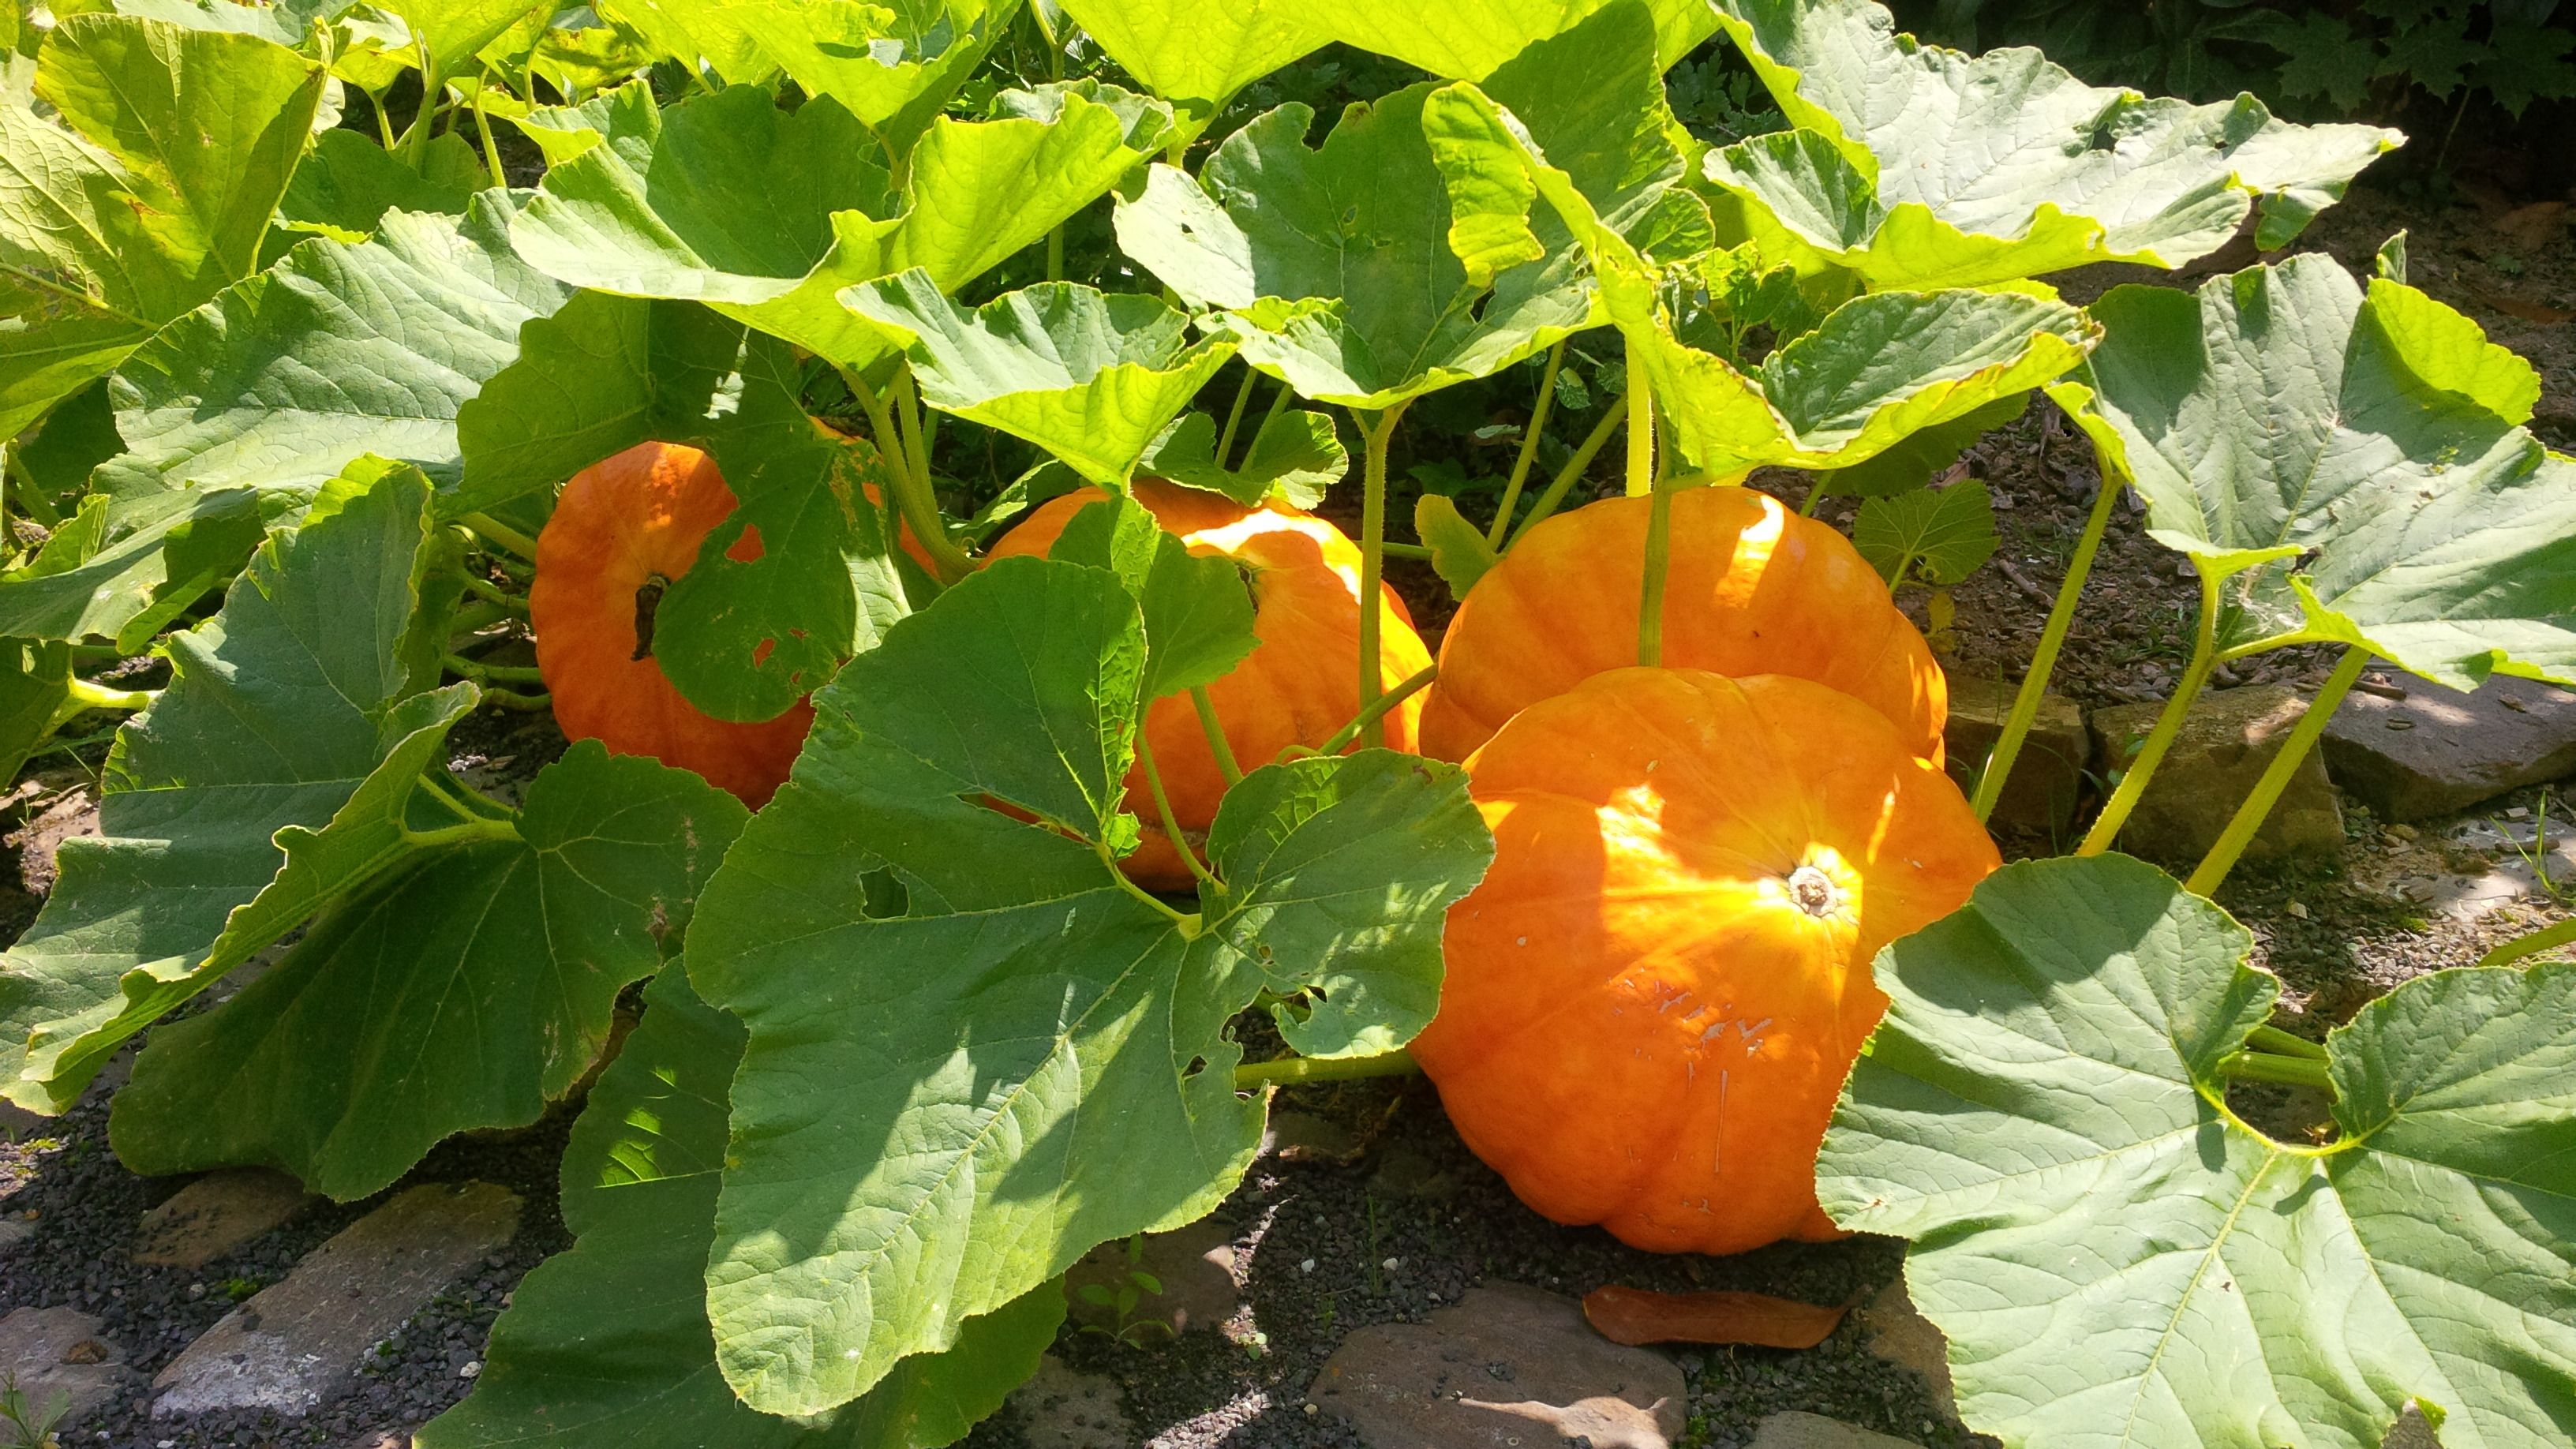 Image of Pumpkin plant